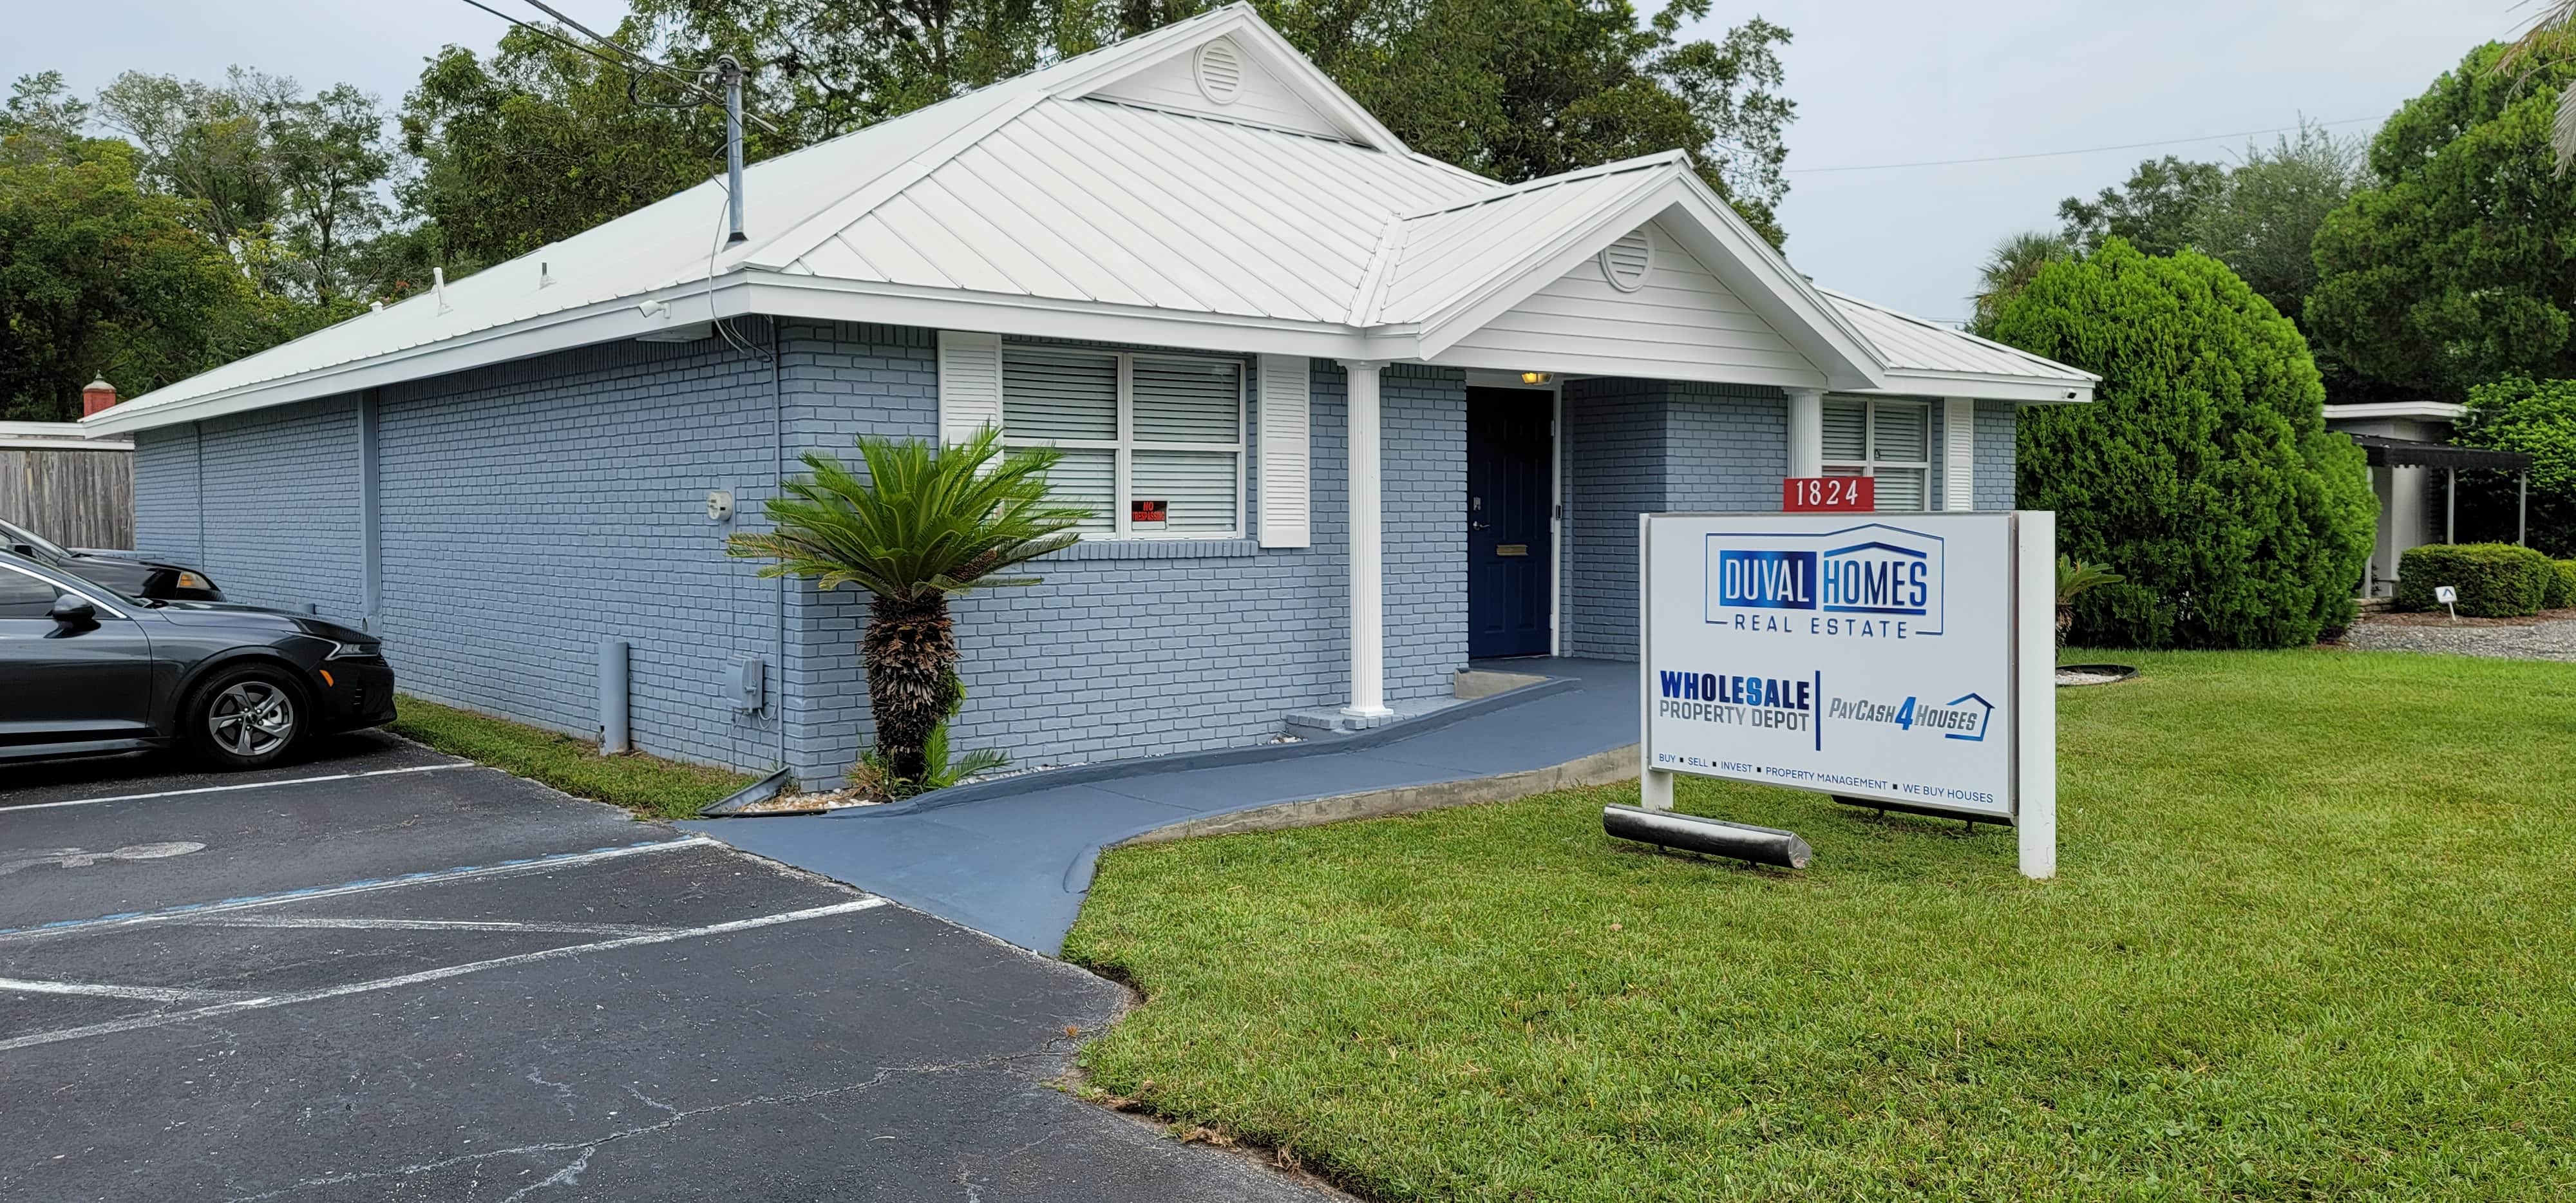 Pay Cash 4 Houses - Jacksonville, FL, US, real estate